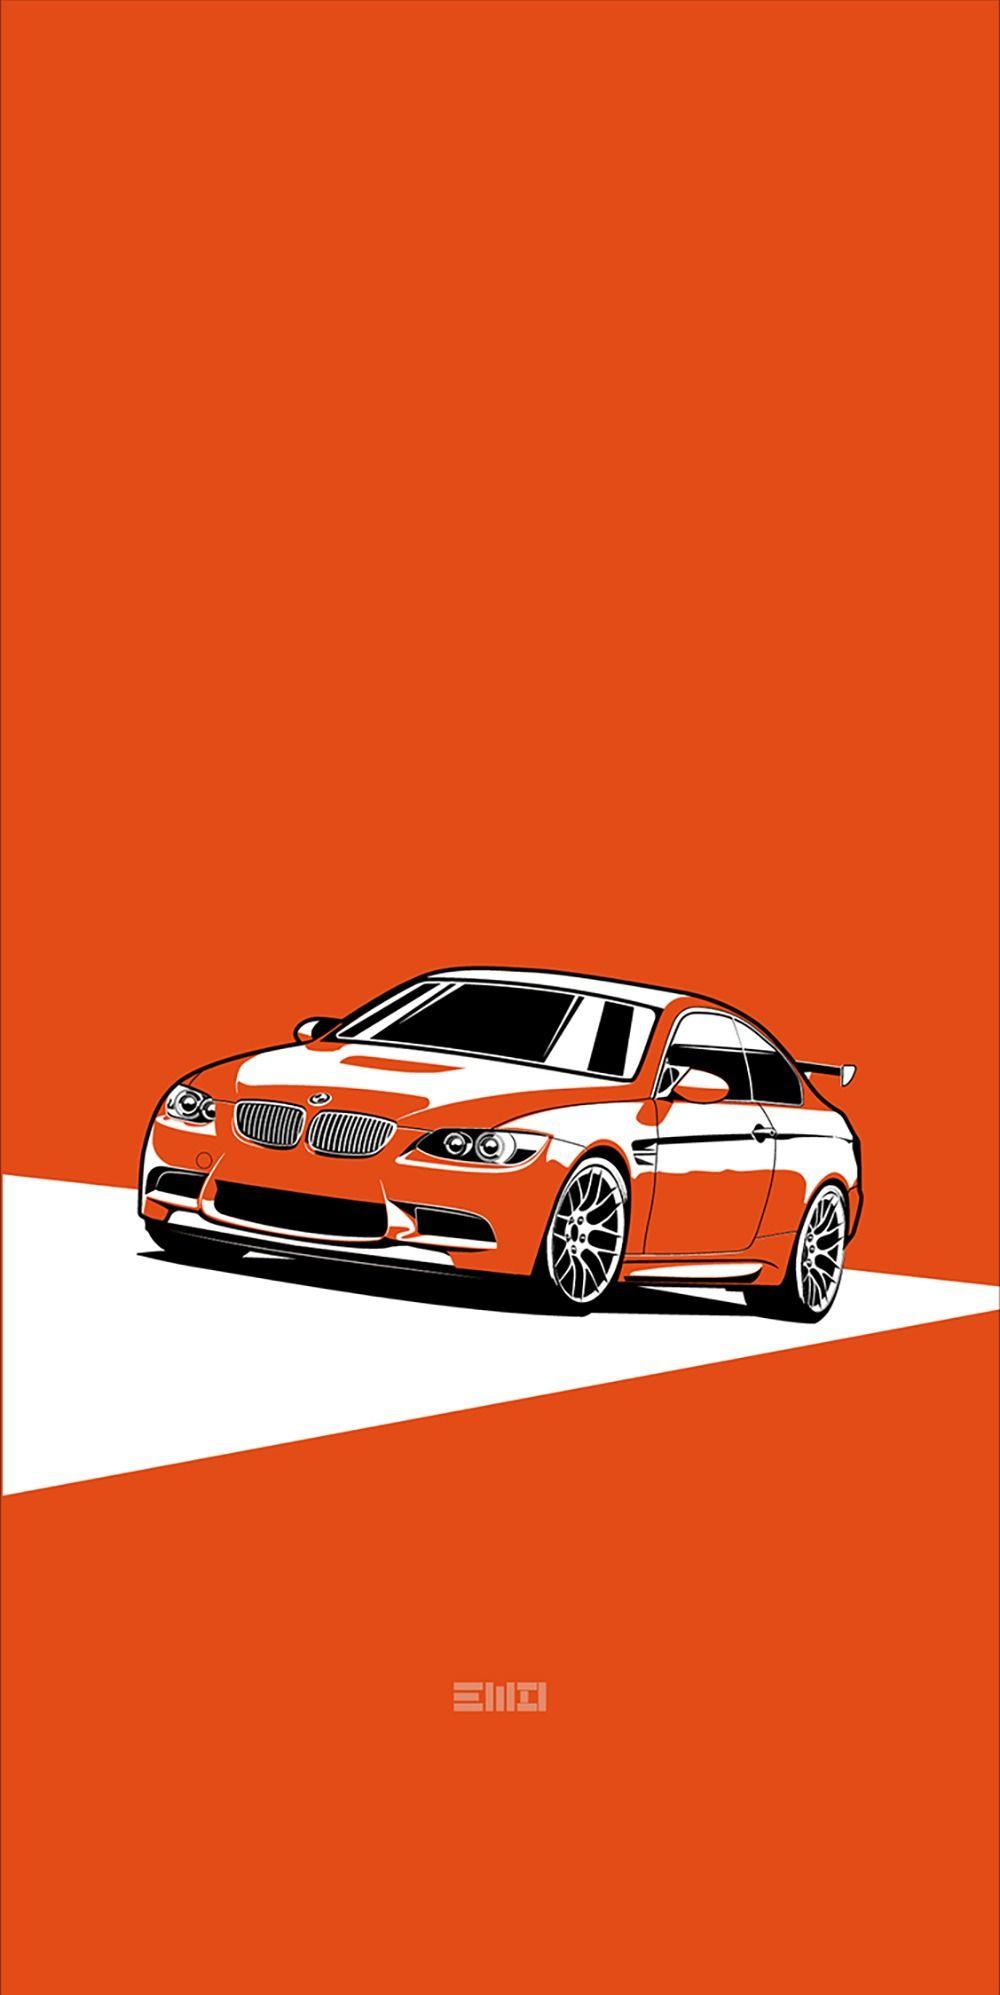 E92 Gts Poster Automotive Art Illustrations